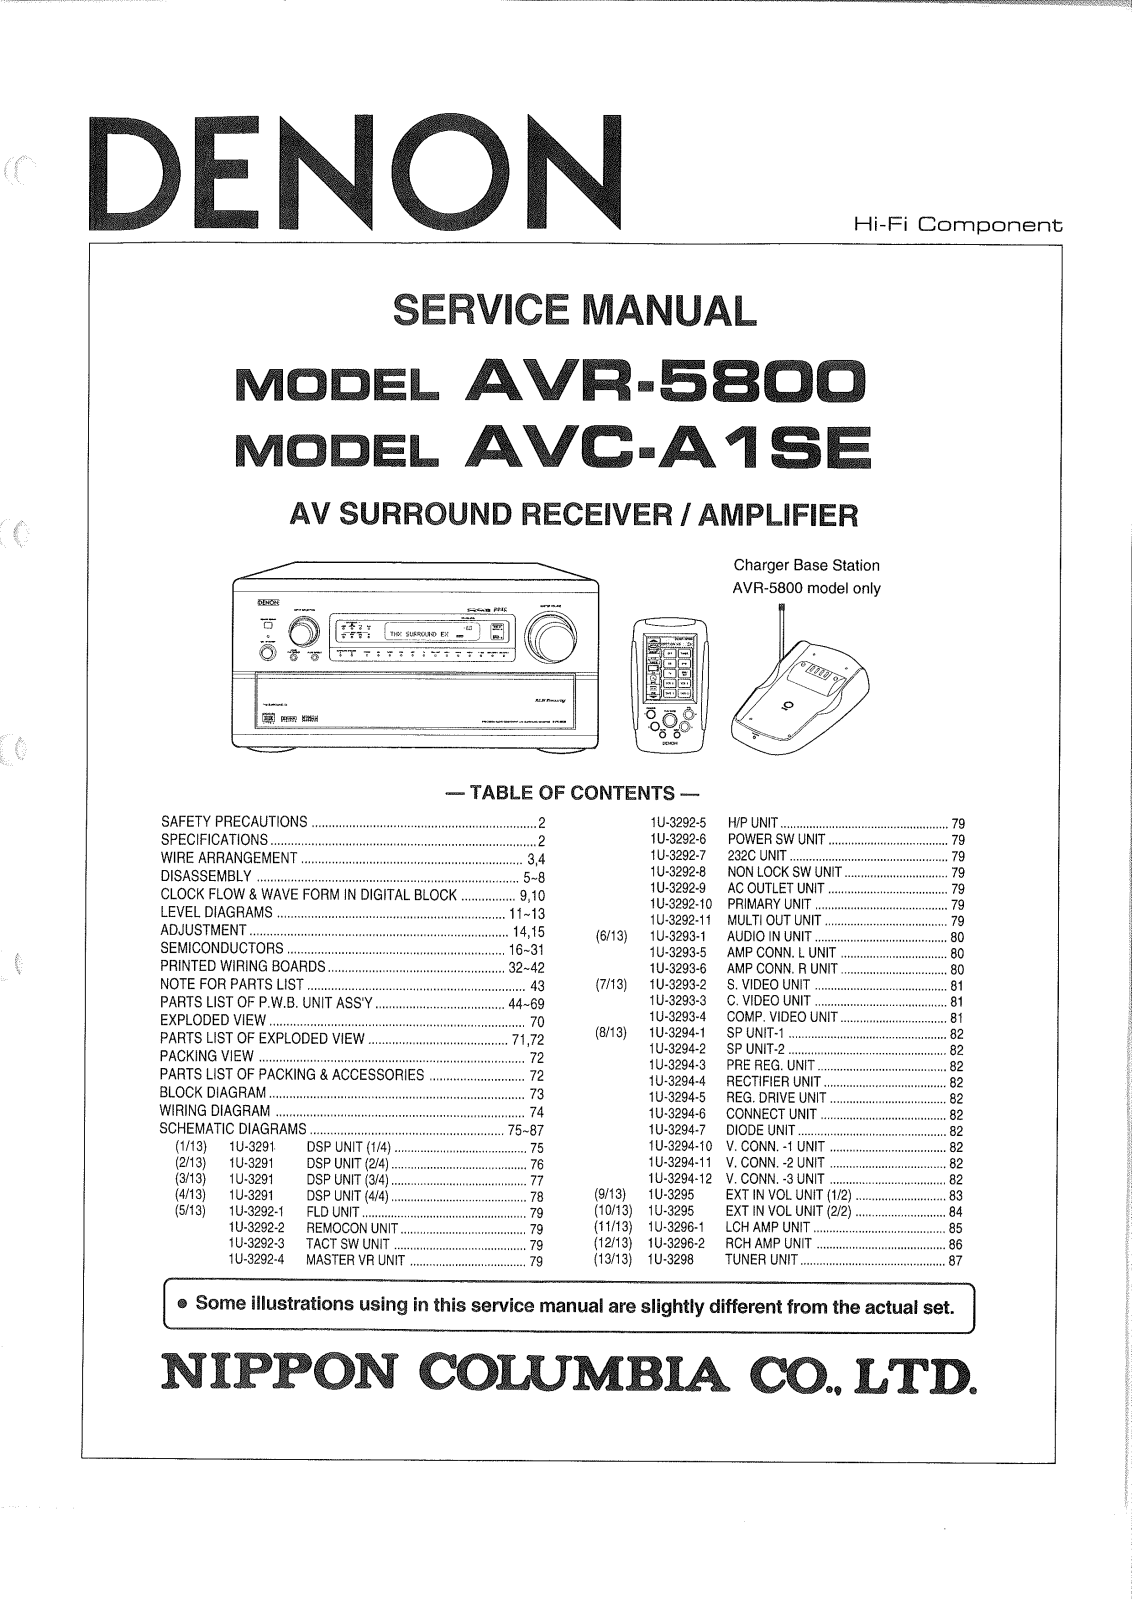 Denon AVR-5800, AVC-A1SE Service Manual